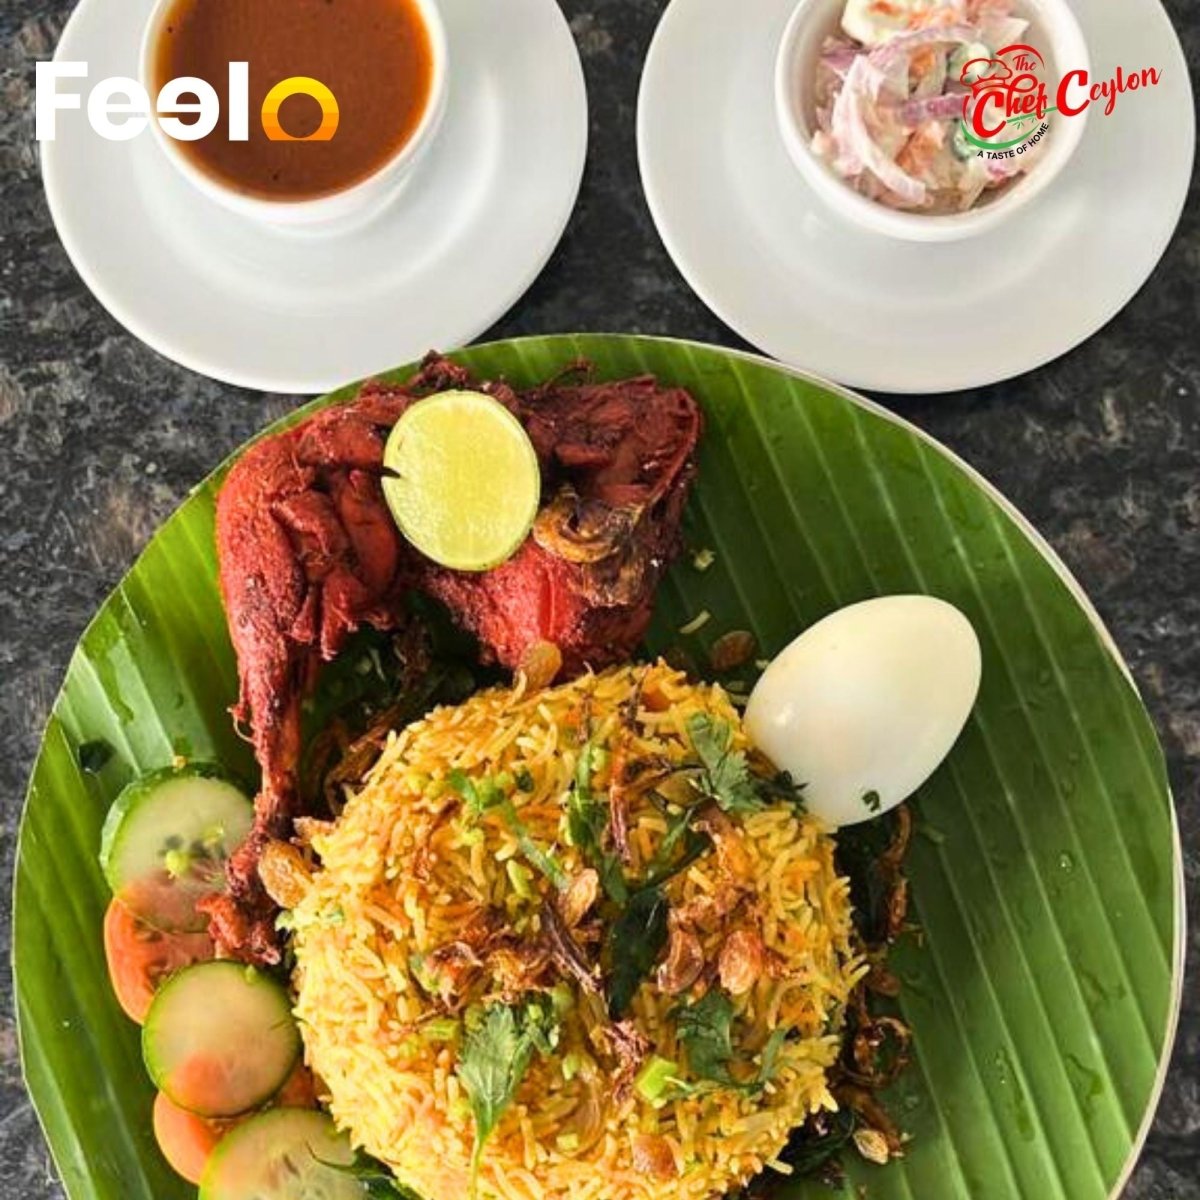 1x Biriyani (Mutton, Prawn, Chicken, Fish or Veg) + 1x Drink or Dessert of your choice - Chef Ceylon, Wellawatta | Feelo